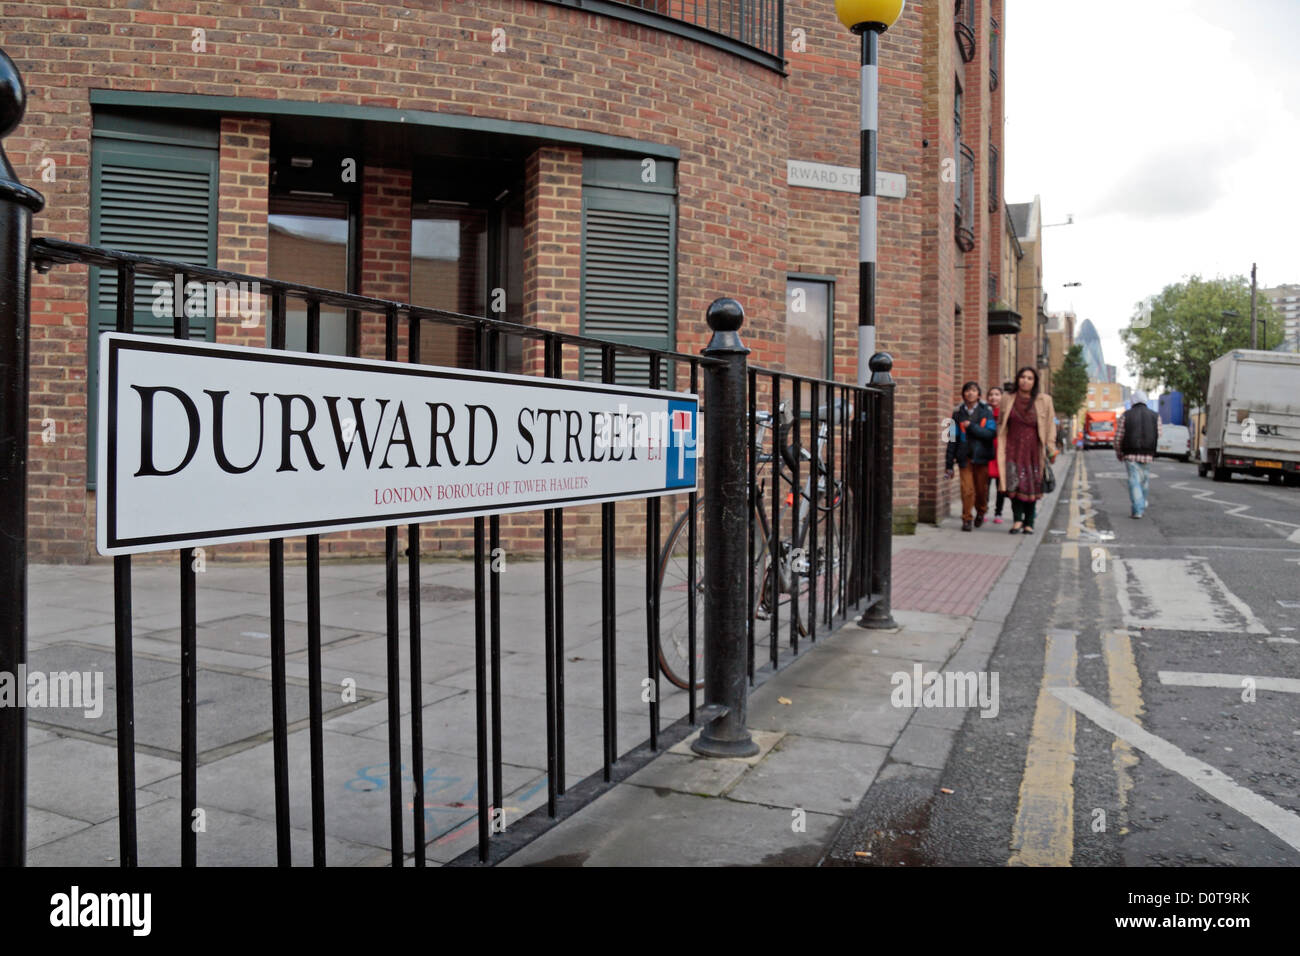 Durward Street, murder scene of Mary Ann Nichols, Jack the Ripper's first victim, Whitechapel, East London, UK. Stock Photo